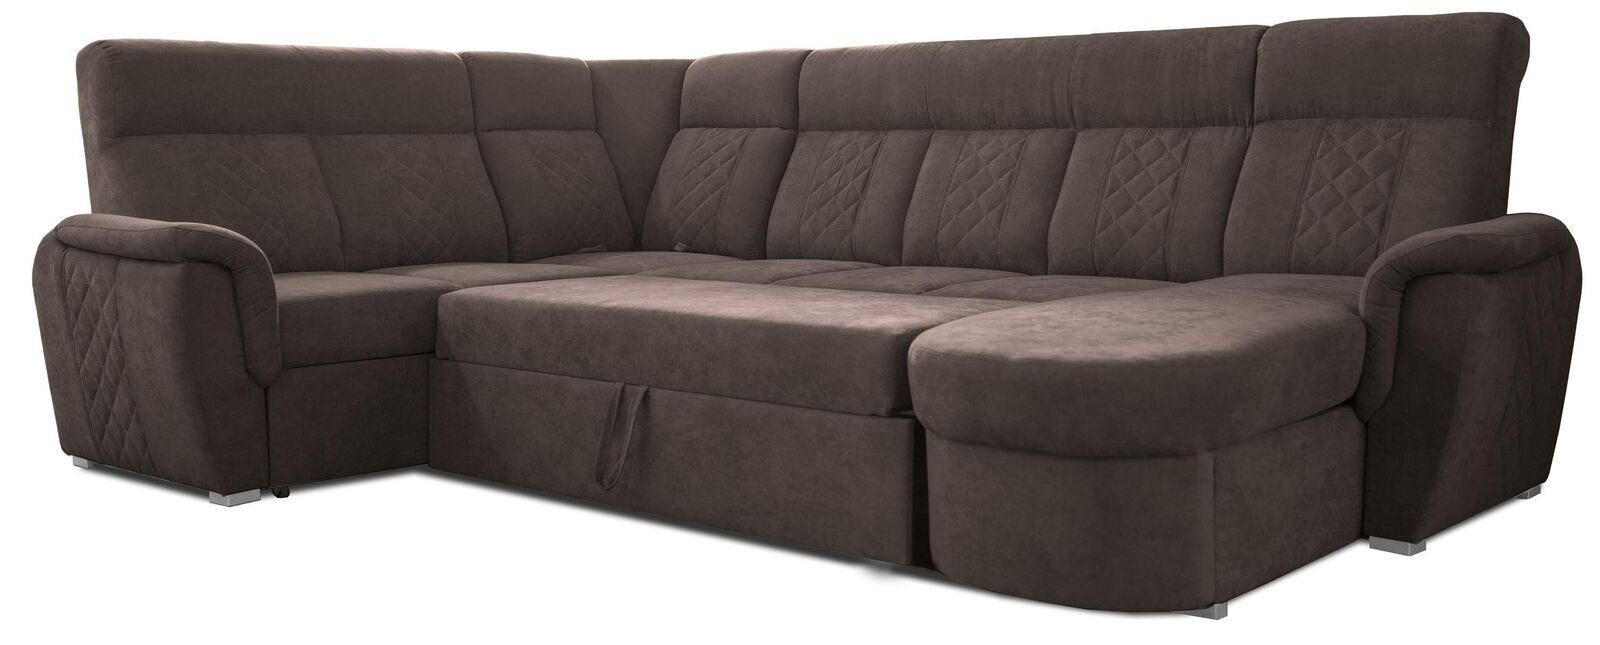 JVmoebel Ecksofa, Wohnlandschaft Polster Sofa Relax Modern Braun Luxus U-form Ecksofa Couch